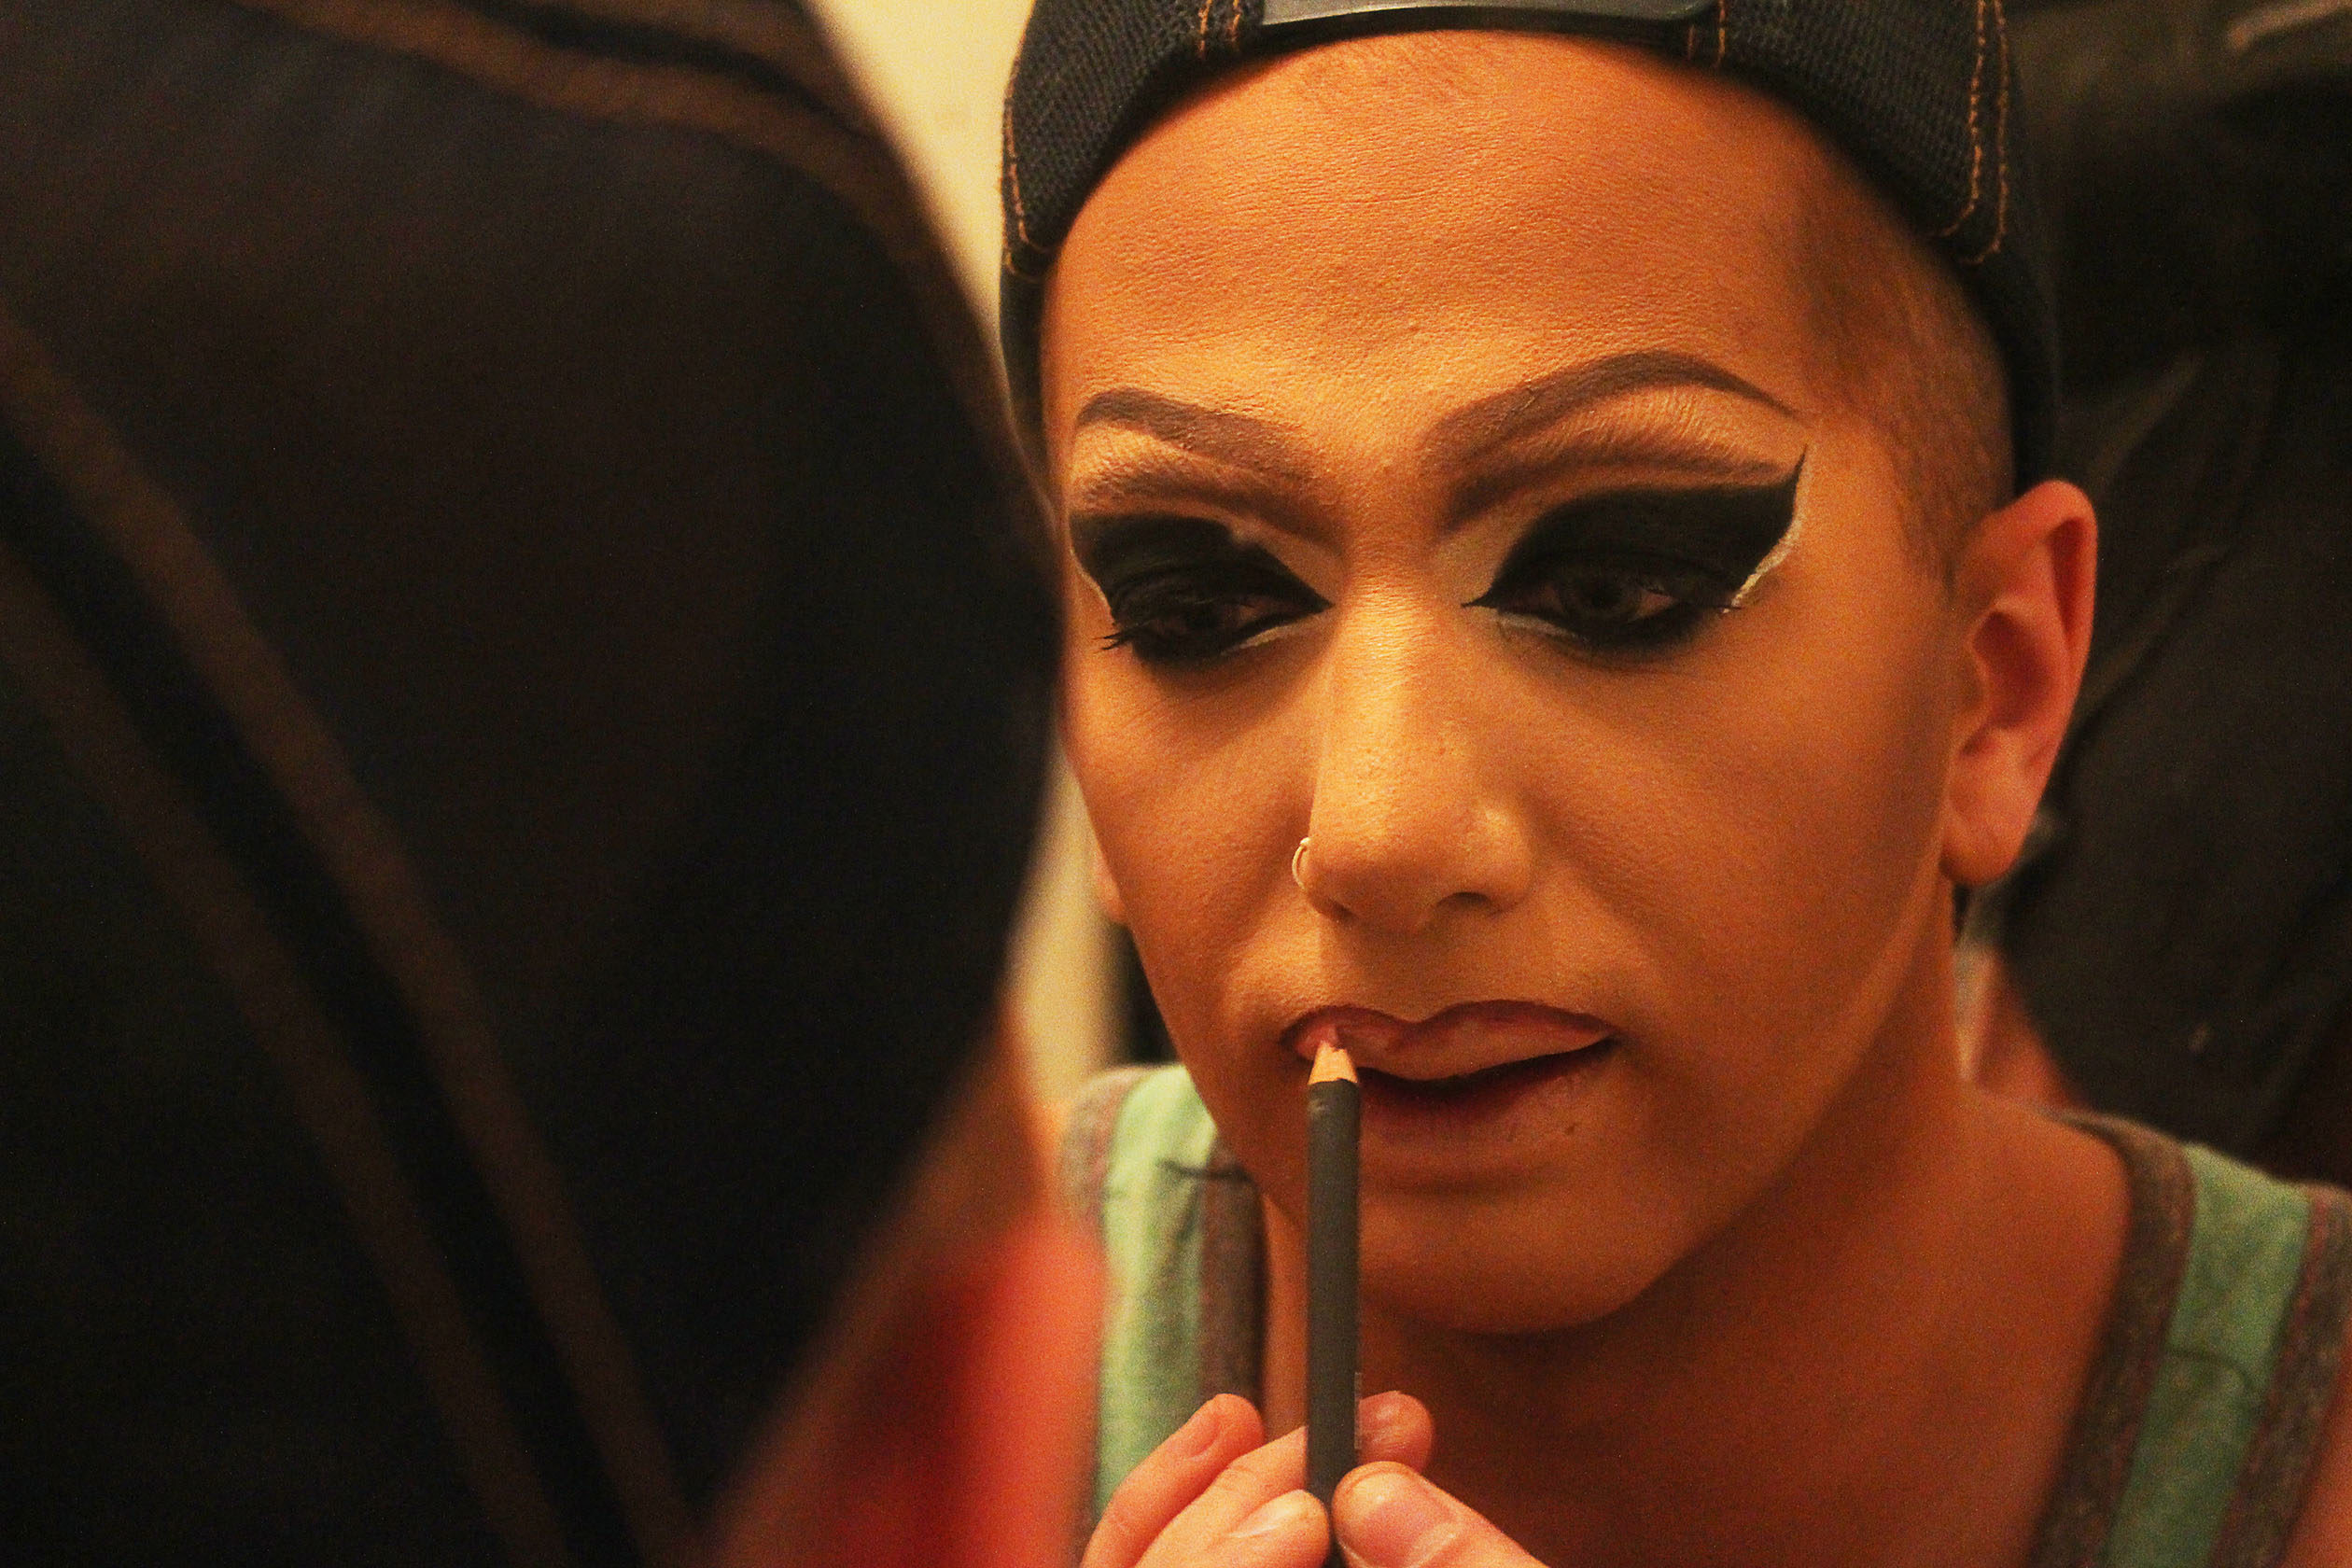 Matty Cameron applying makeup in the mirror.